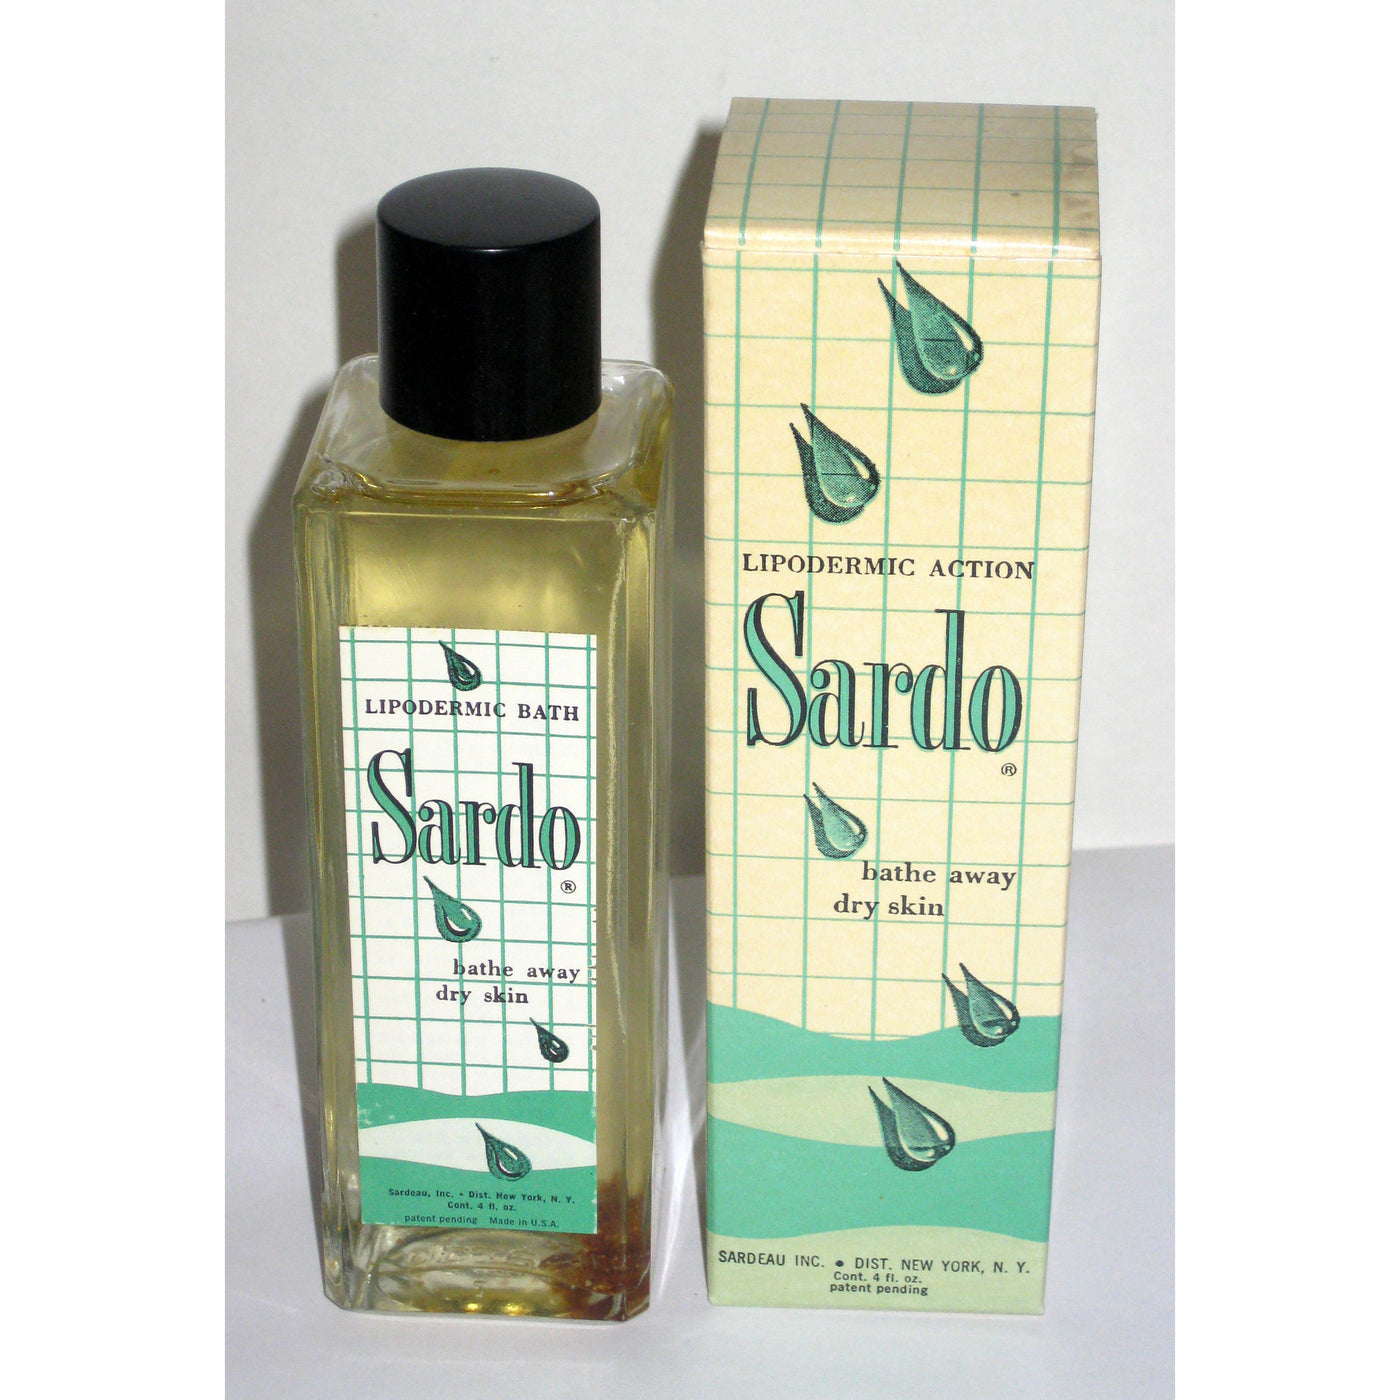 Sardo Dry Skin Bath Oil